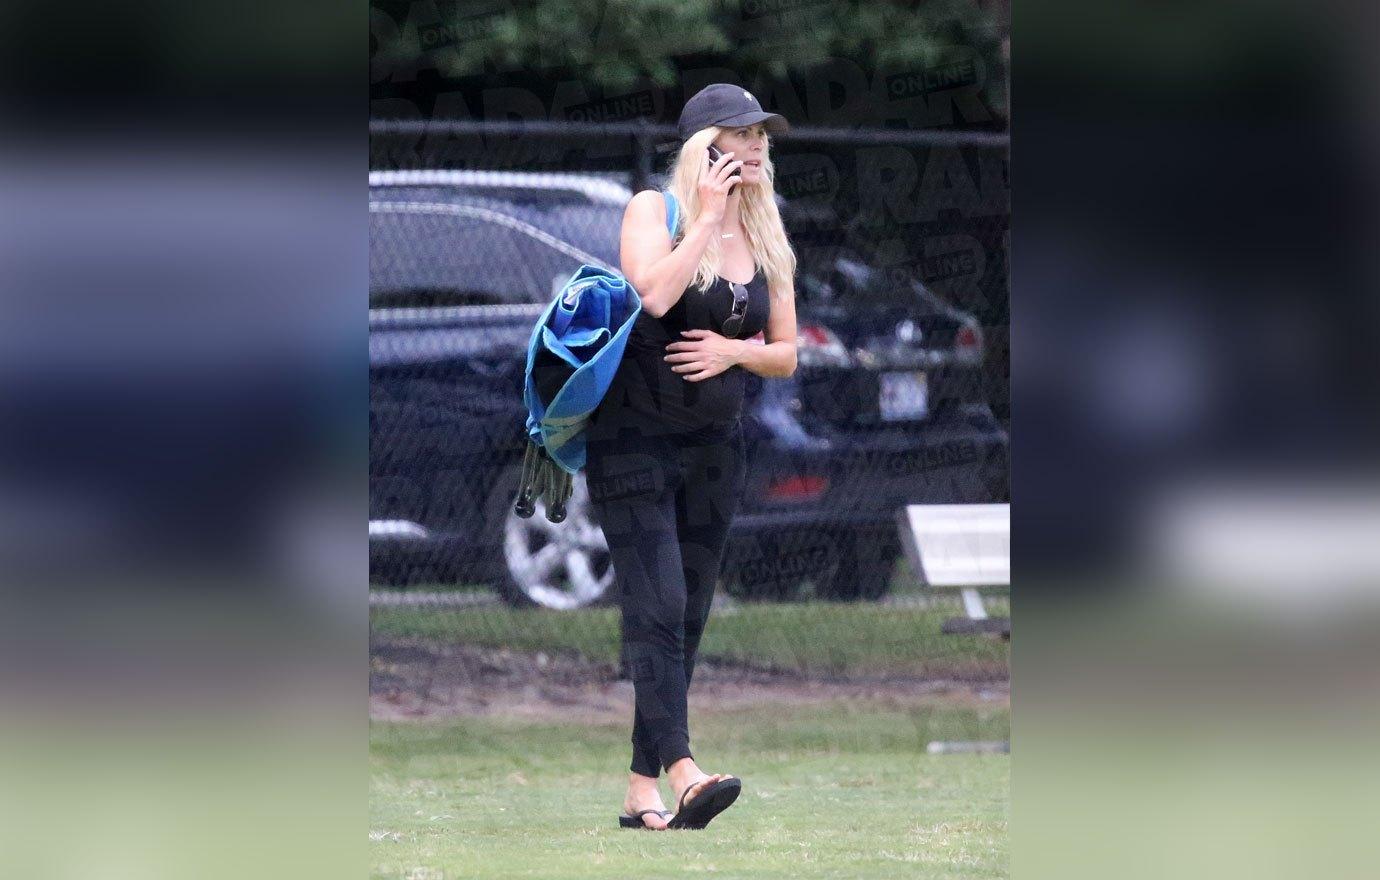 Tiger Woods Alleged Loves Exposed As Elin Nordegren Shows Pregnancy